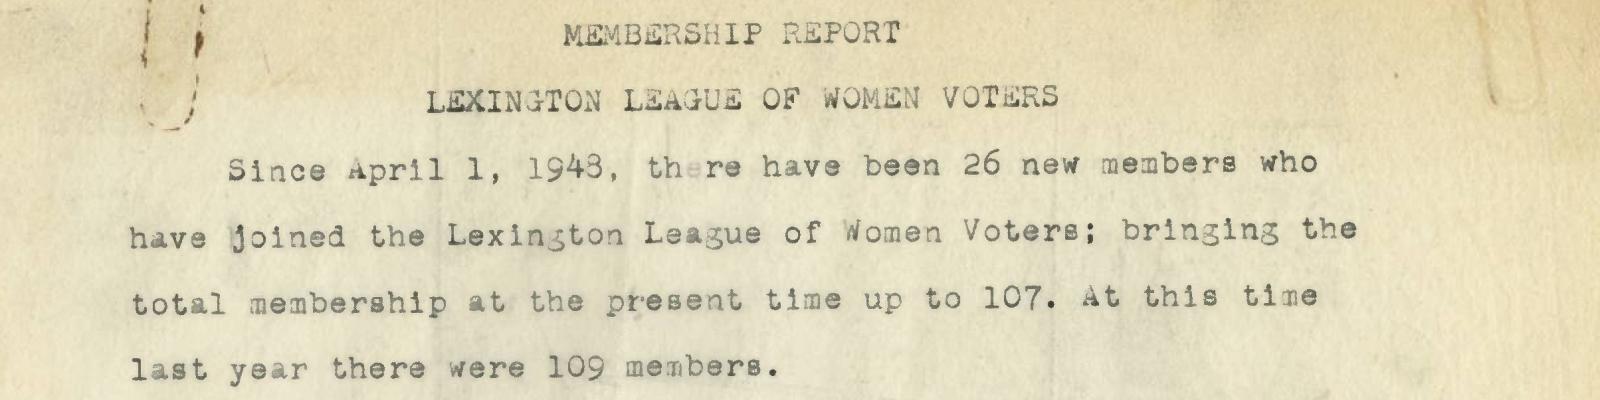 membership report league of women voters 1948